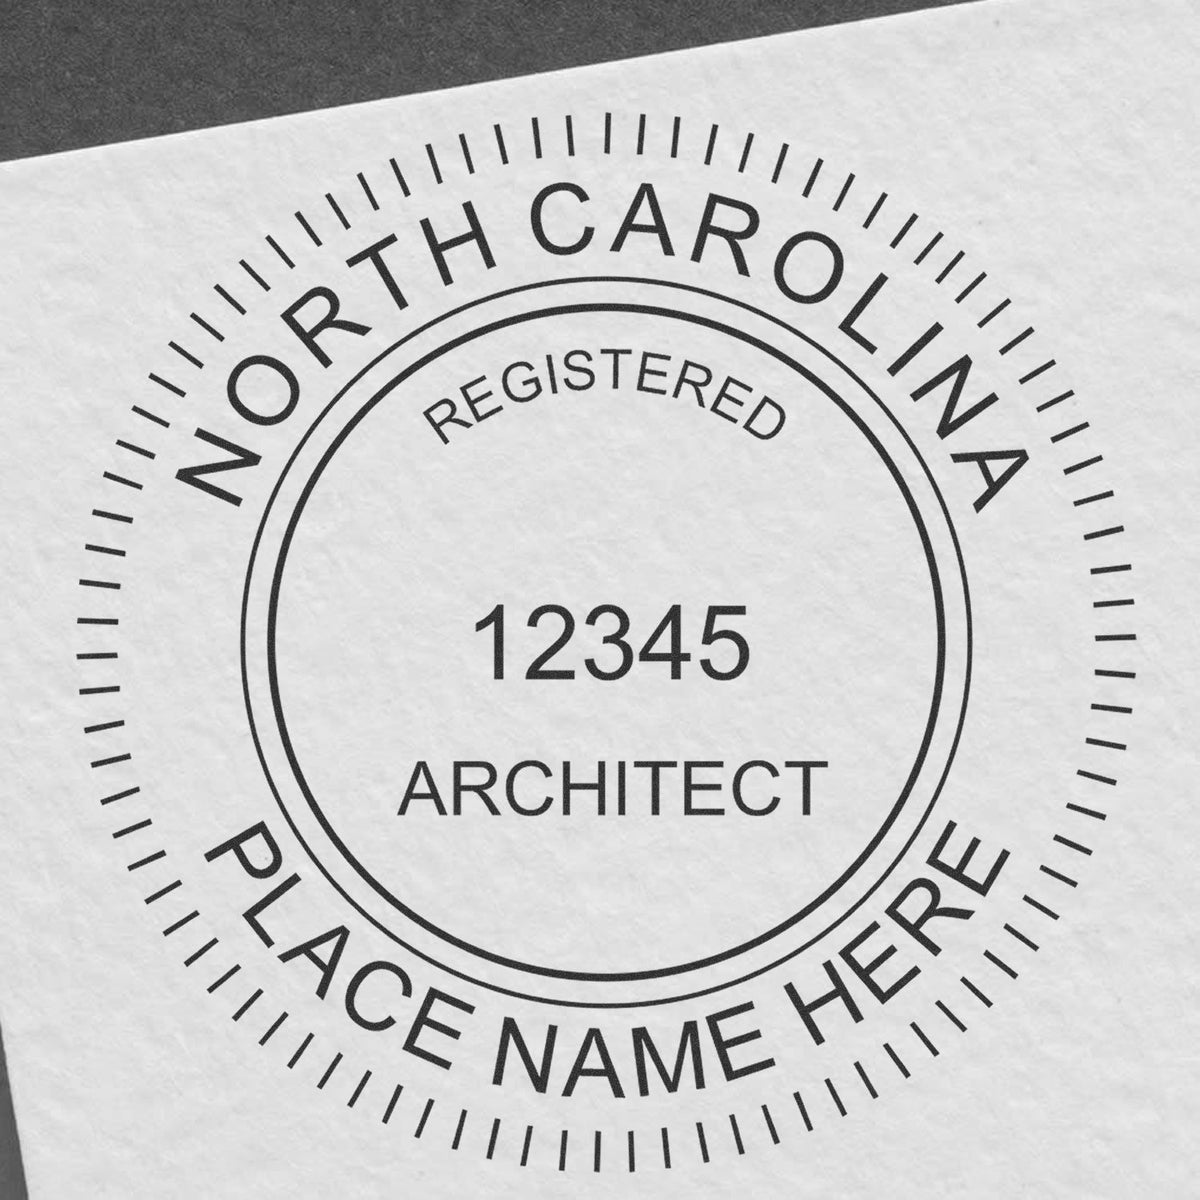 North Carolina Architect Seal Stamp Lifestyle Photo